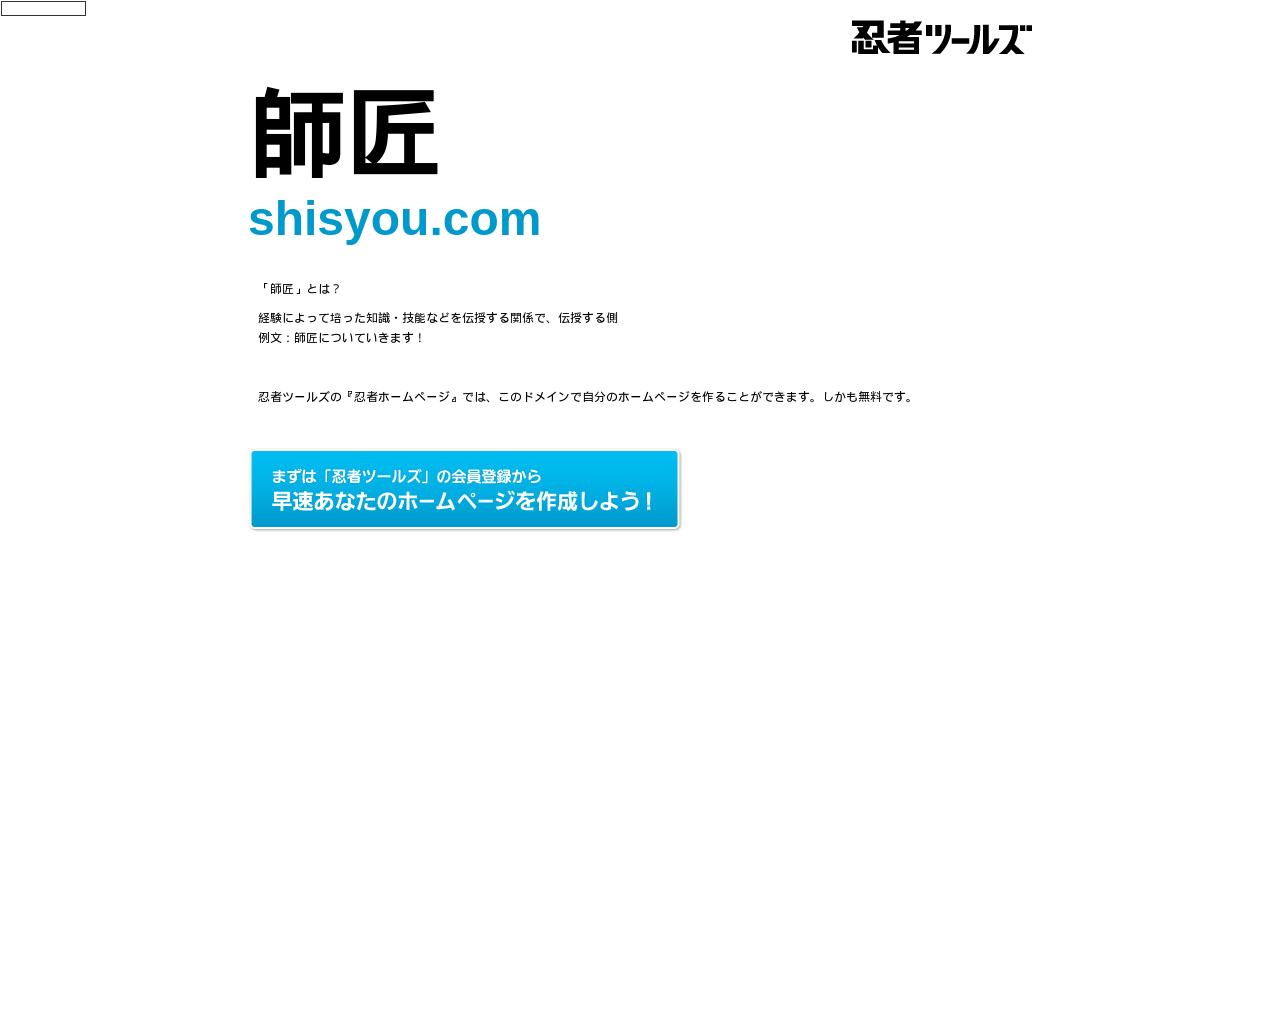 shisyou.com